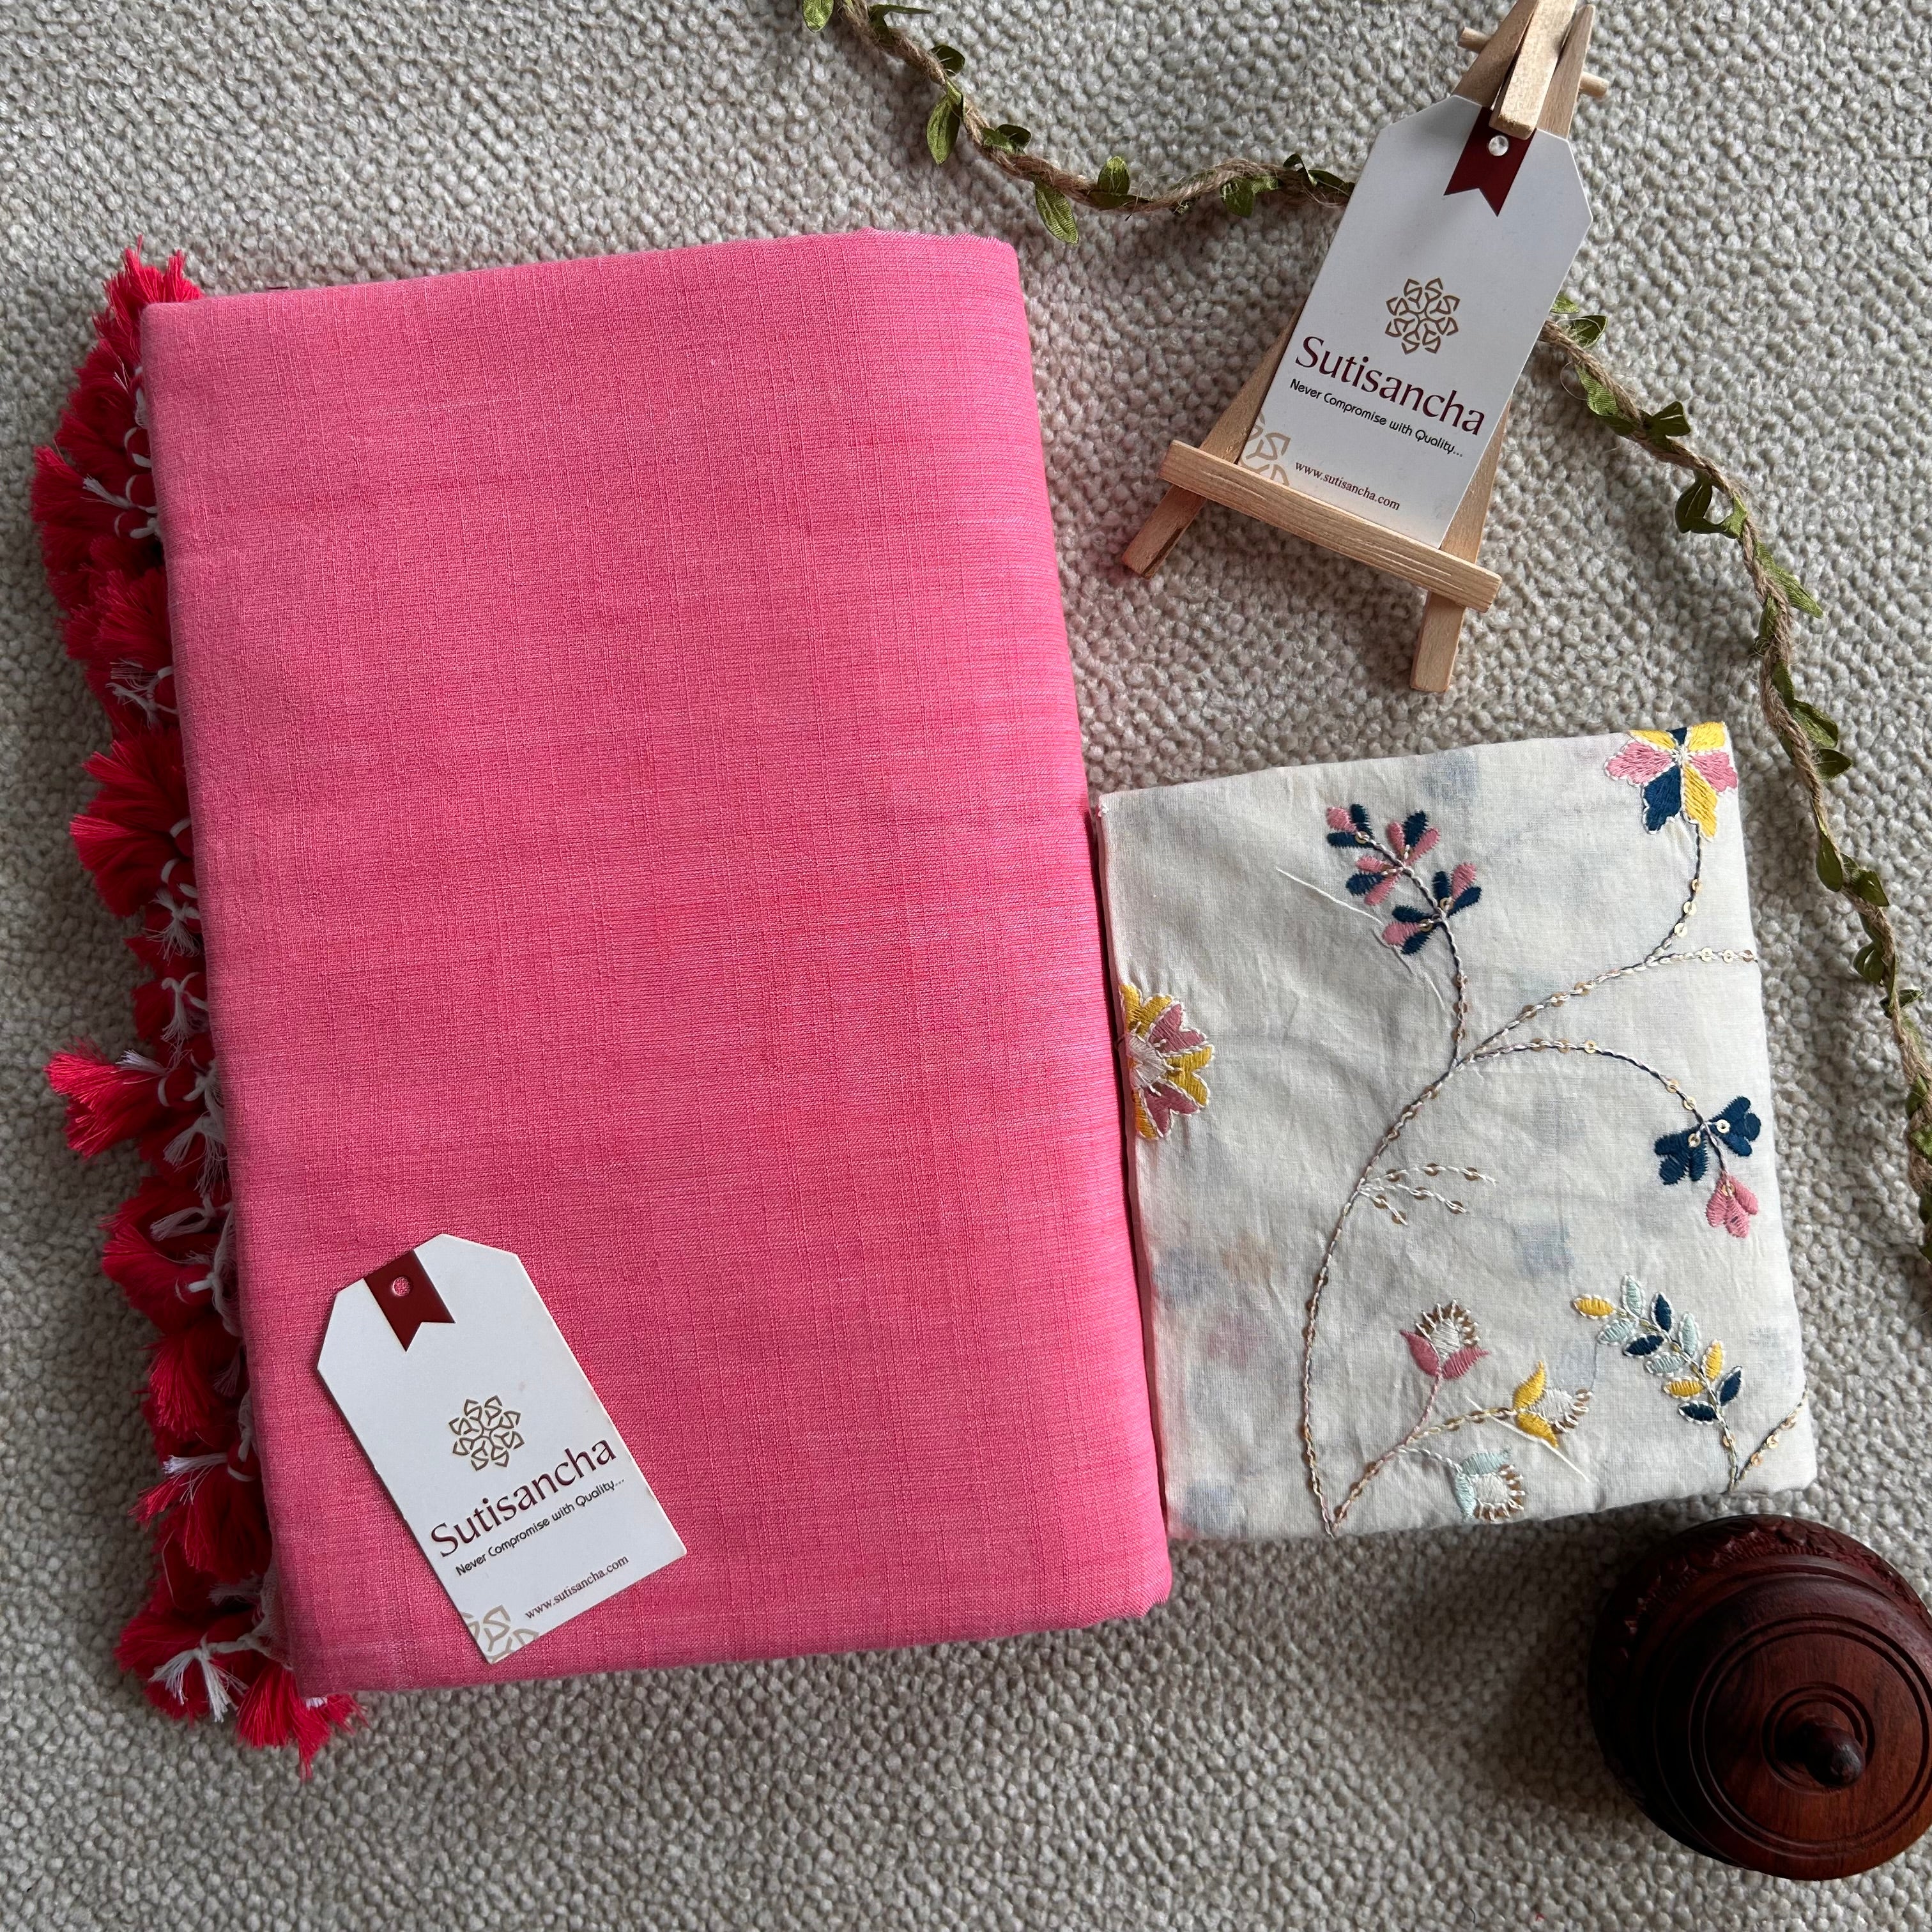 Sutisancha Peach Handloom Cotton Saree with Designer Blouse